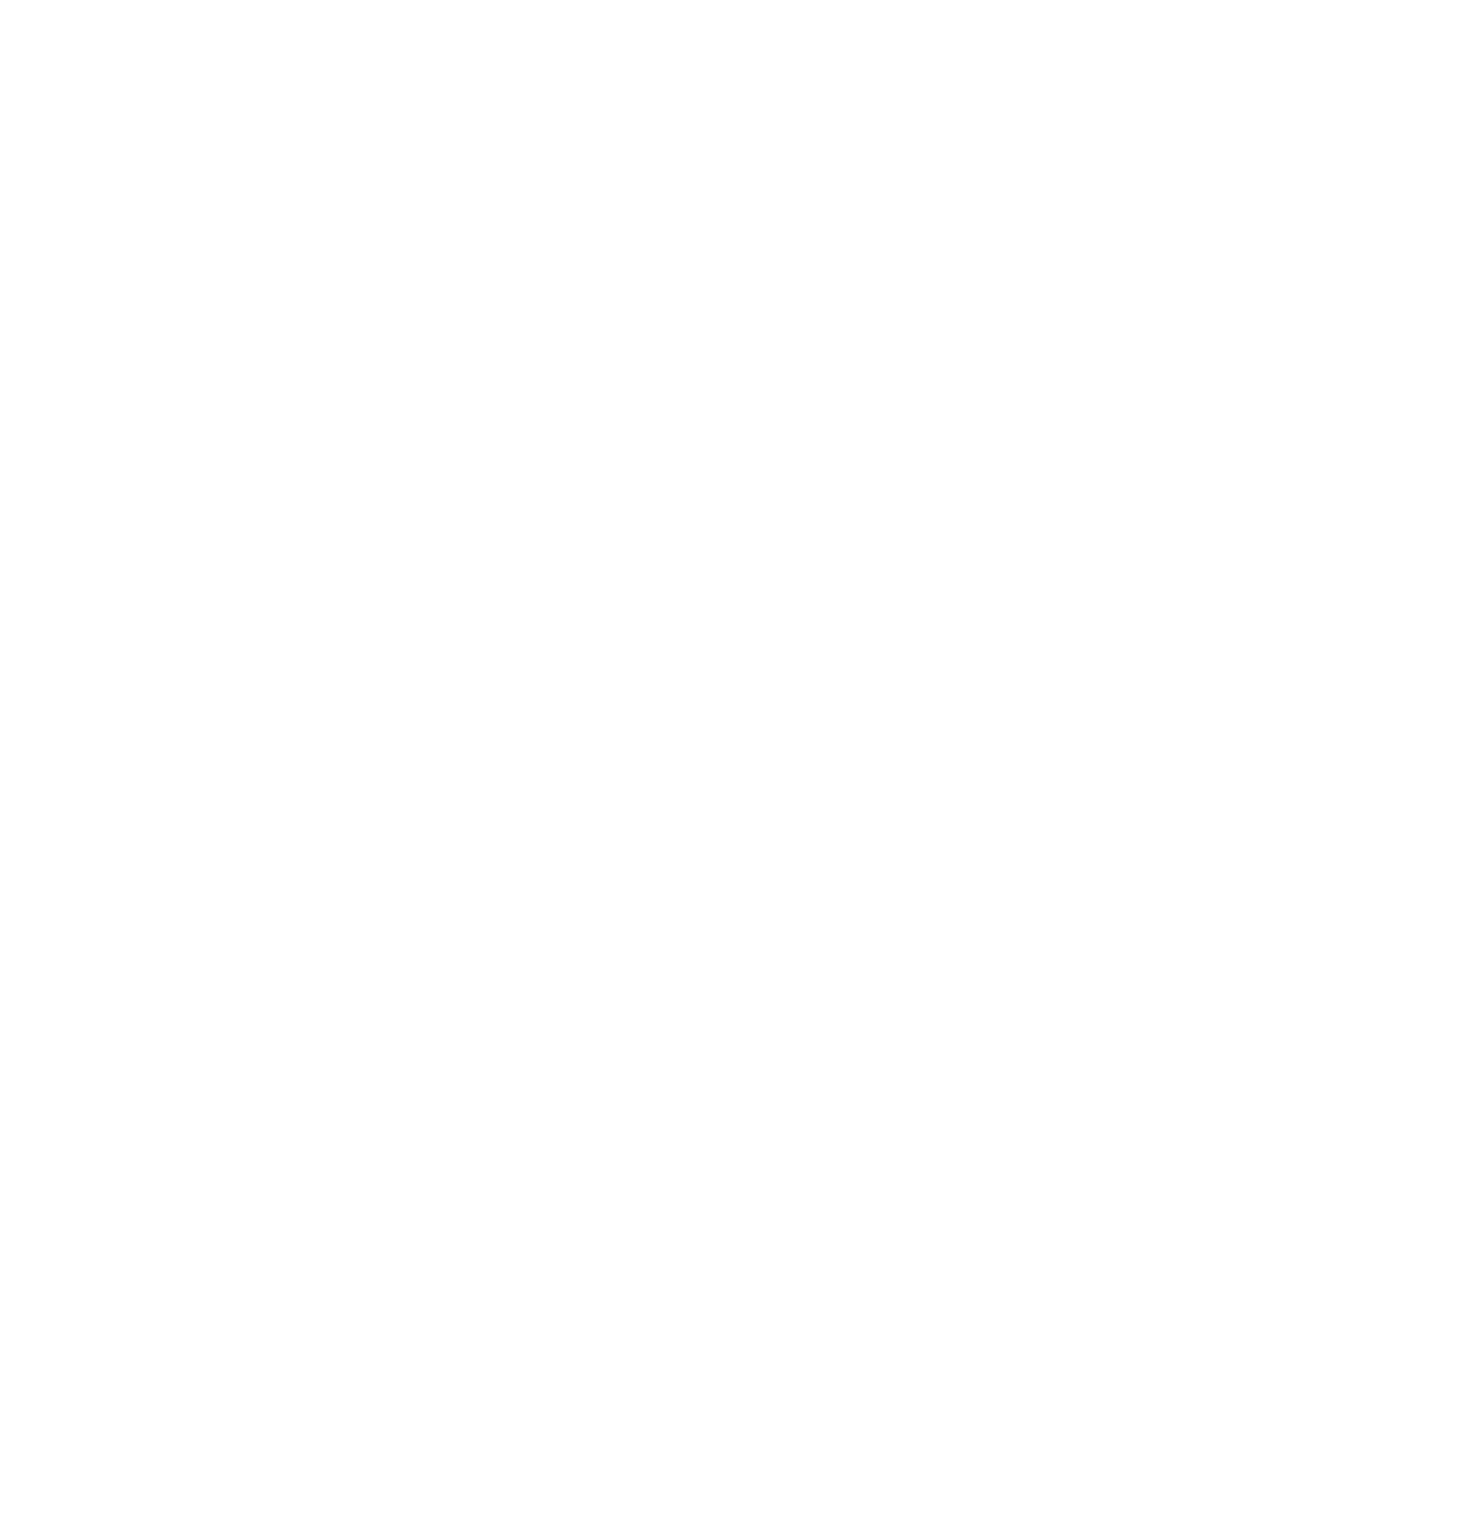 Duke Energy logo for dark backgrounds (transparent PNG)